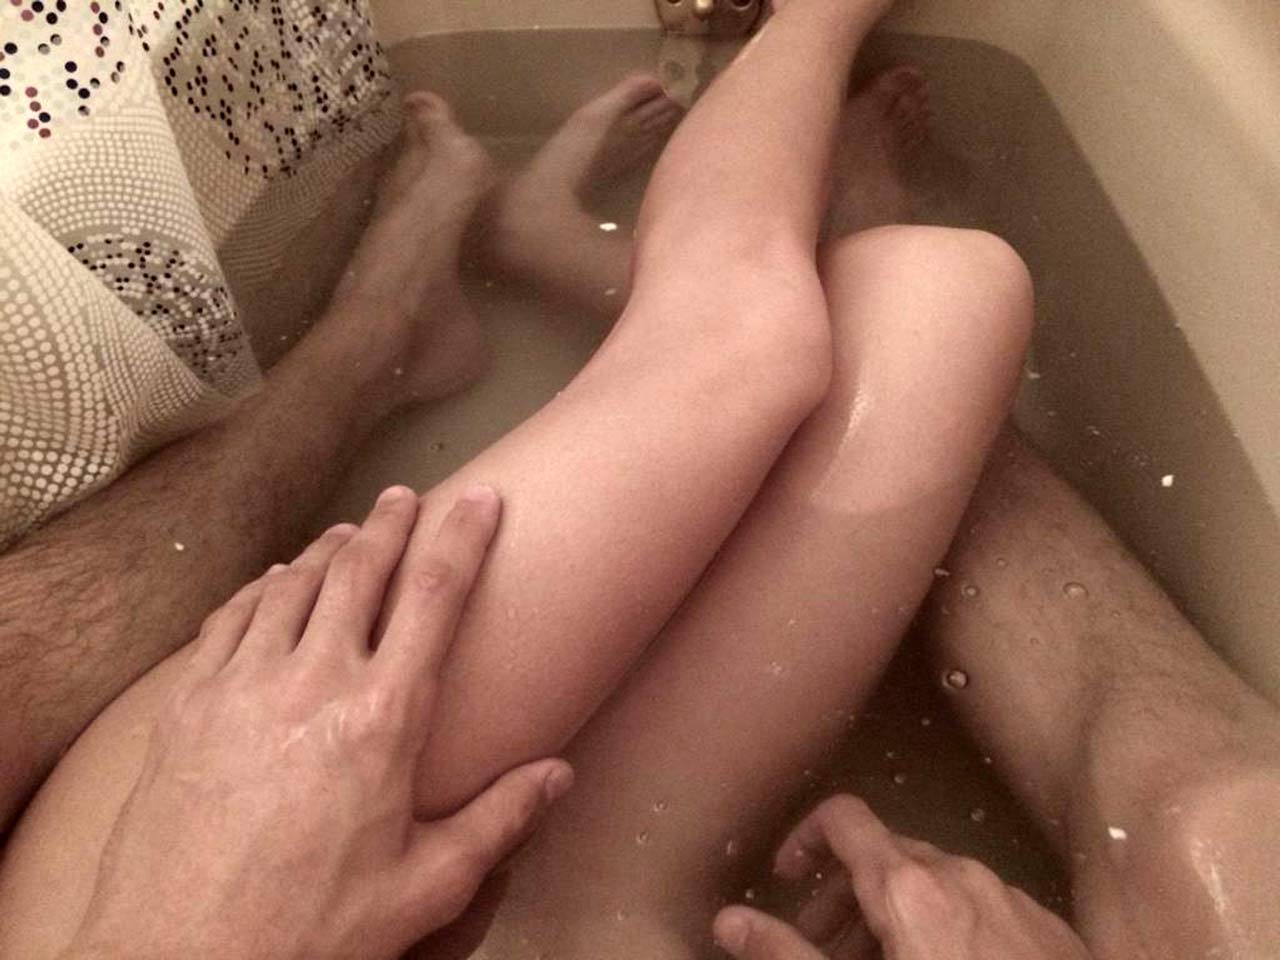 Na Podhvate Nude And Blowjob Leaked Photos Anastasia Bondarchuk Nudes